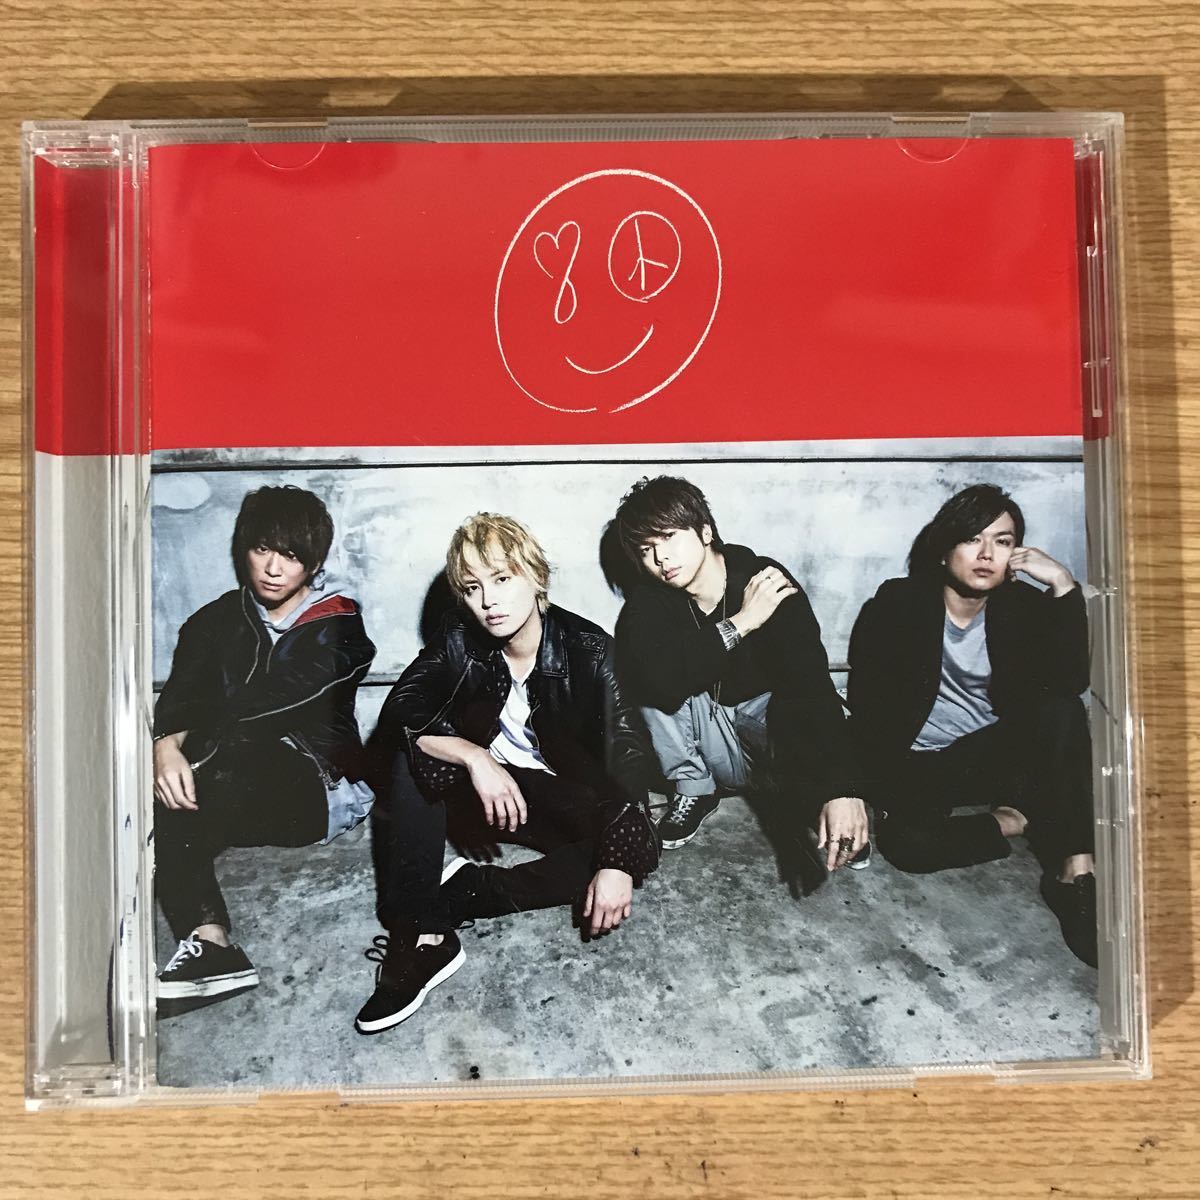 SALE 95%OFF 人気特価 138 帯付 中古CD100円 初回盤B LPS NEWS